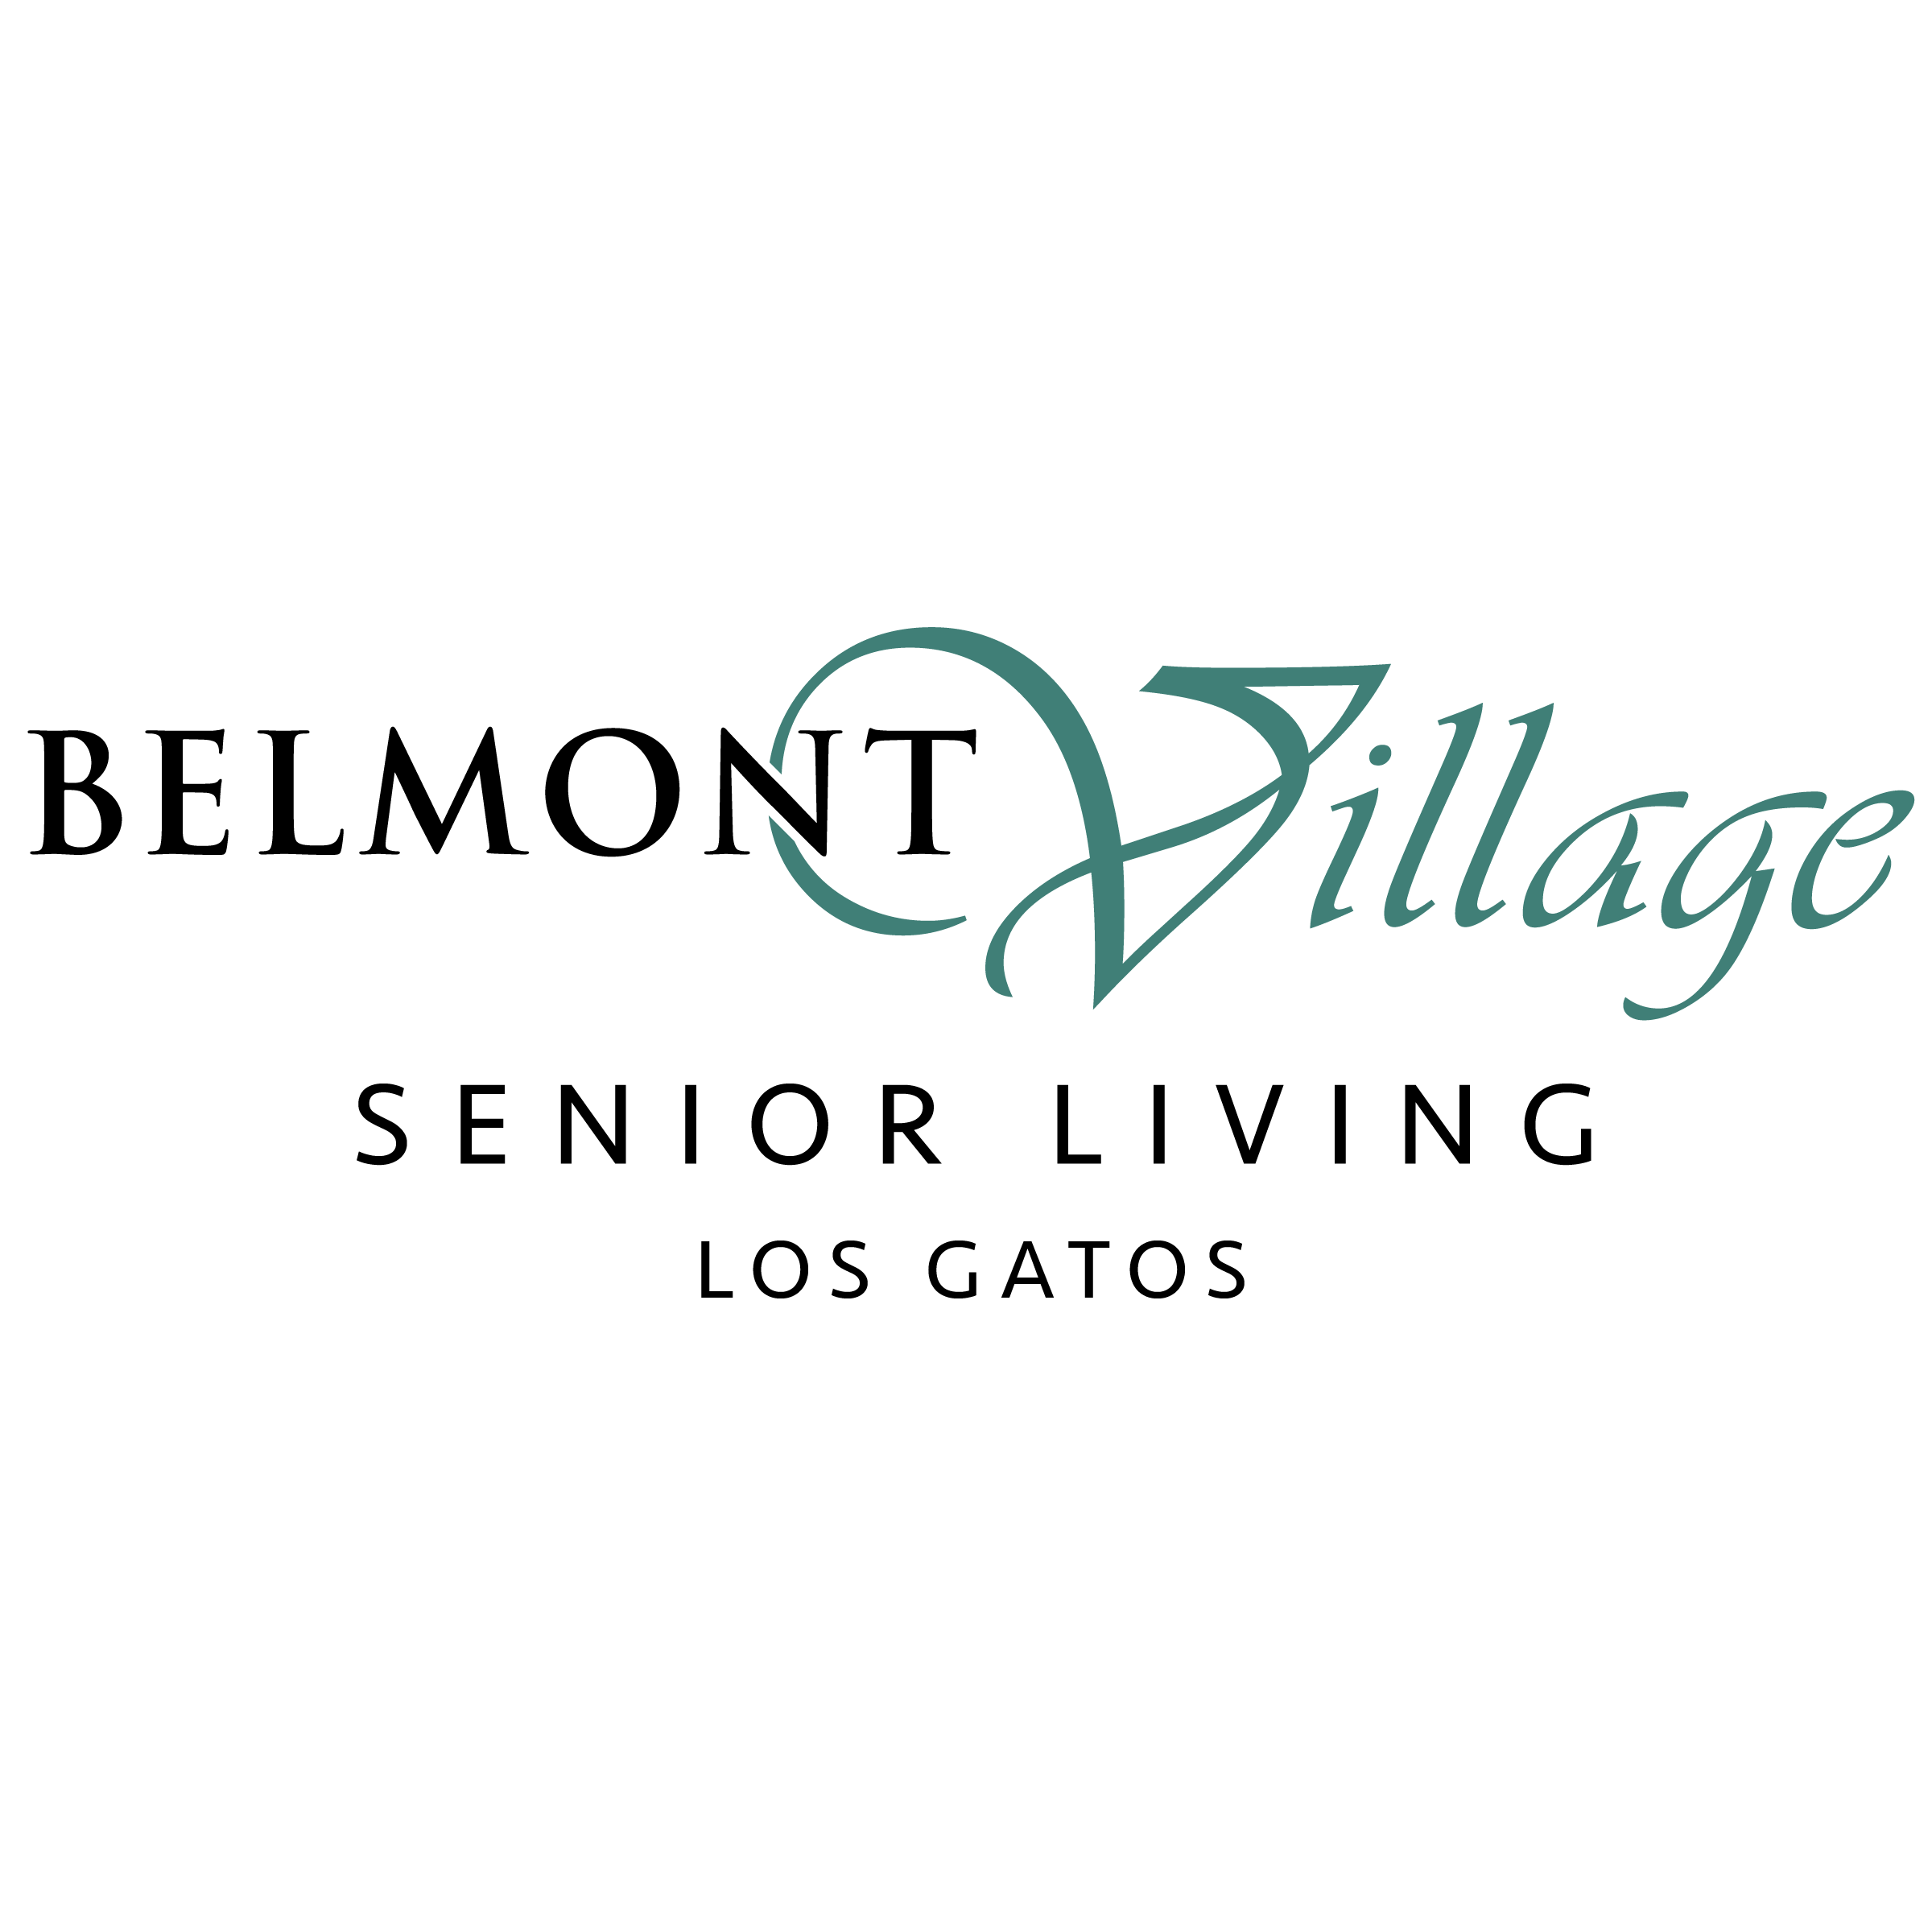 Belmont Village Senior Living Los Gatos